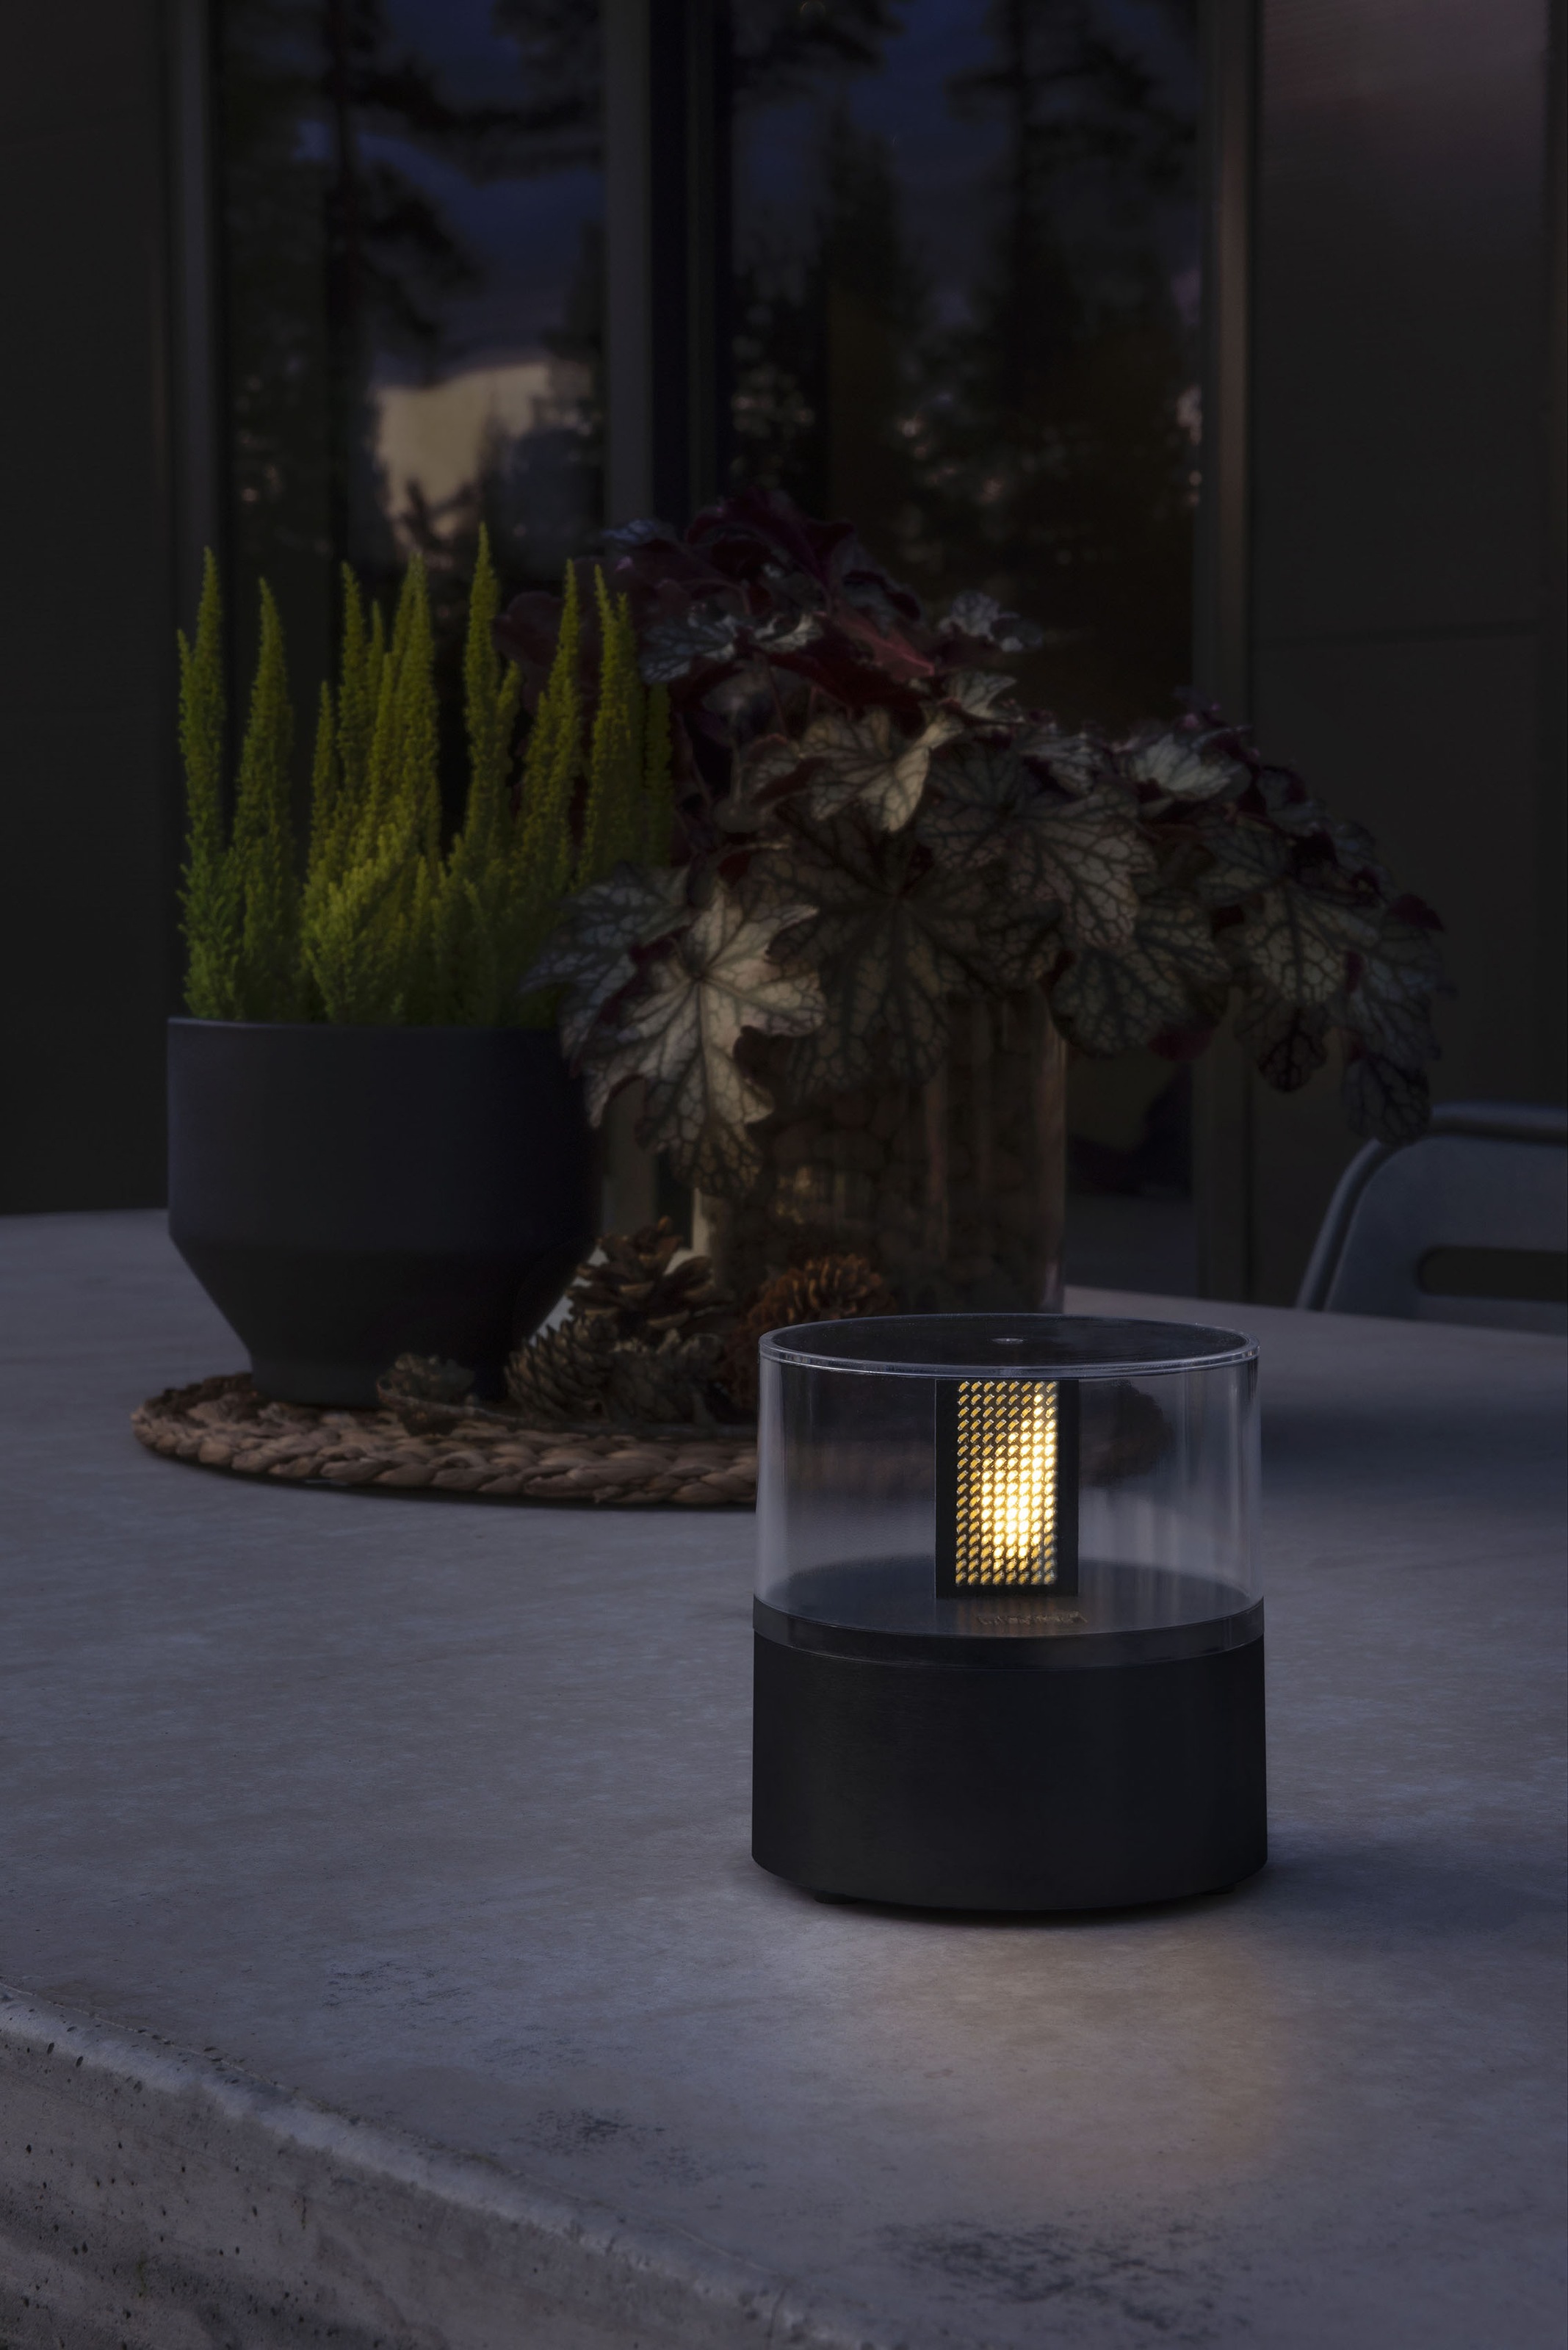 KONSTSMIDE LED Dekolicht, 256 flammig-flammig, LED Flamme mit schwarzem Kunststoffsockel und transparenter Abdeckung